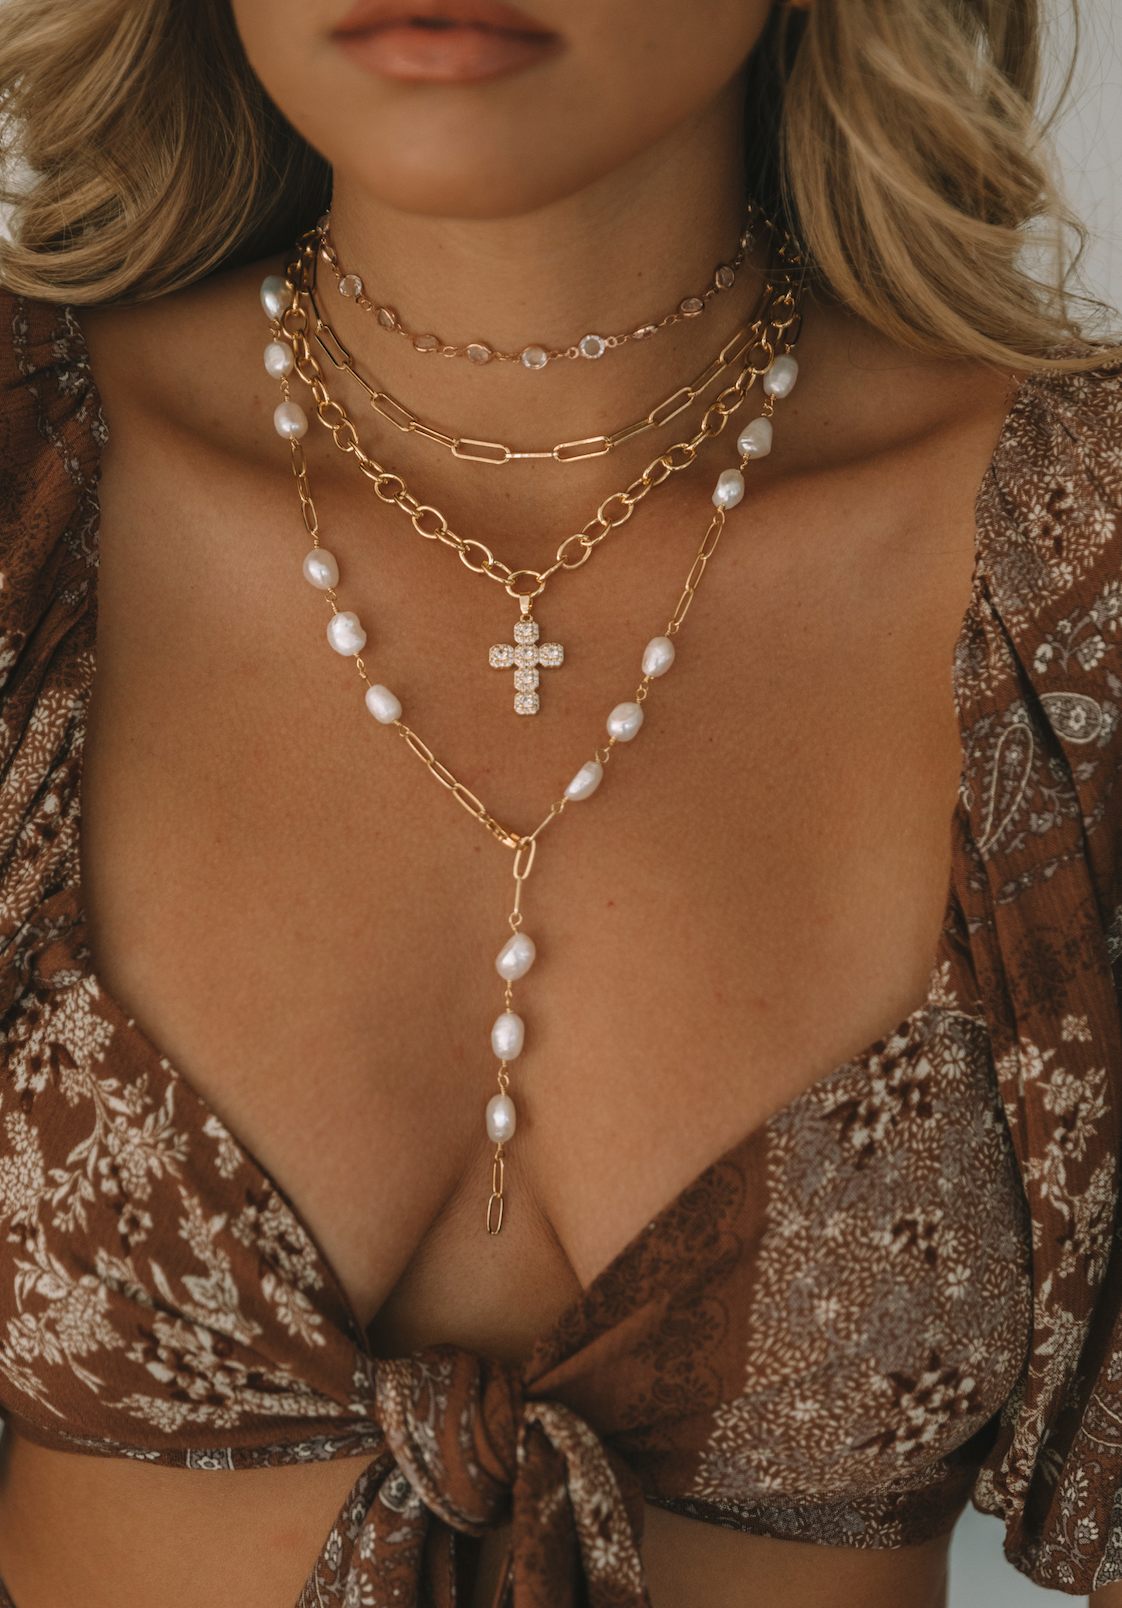 The Baguette Cross Necklace